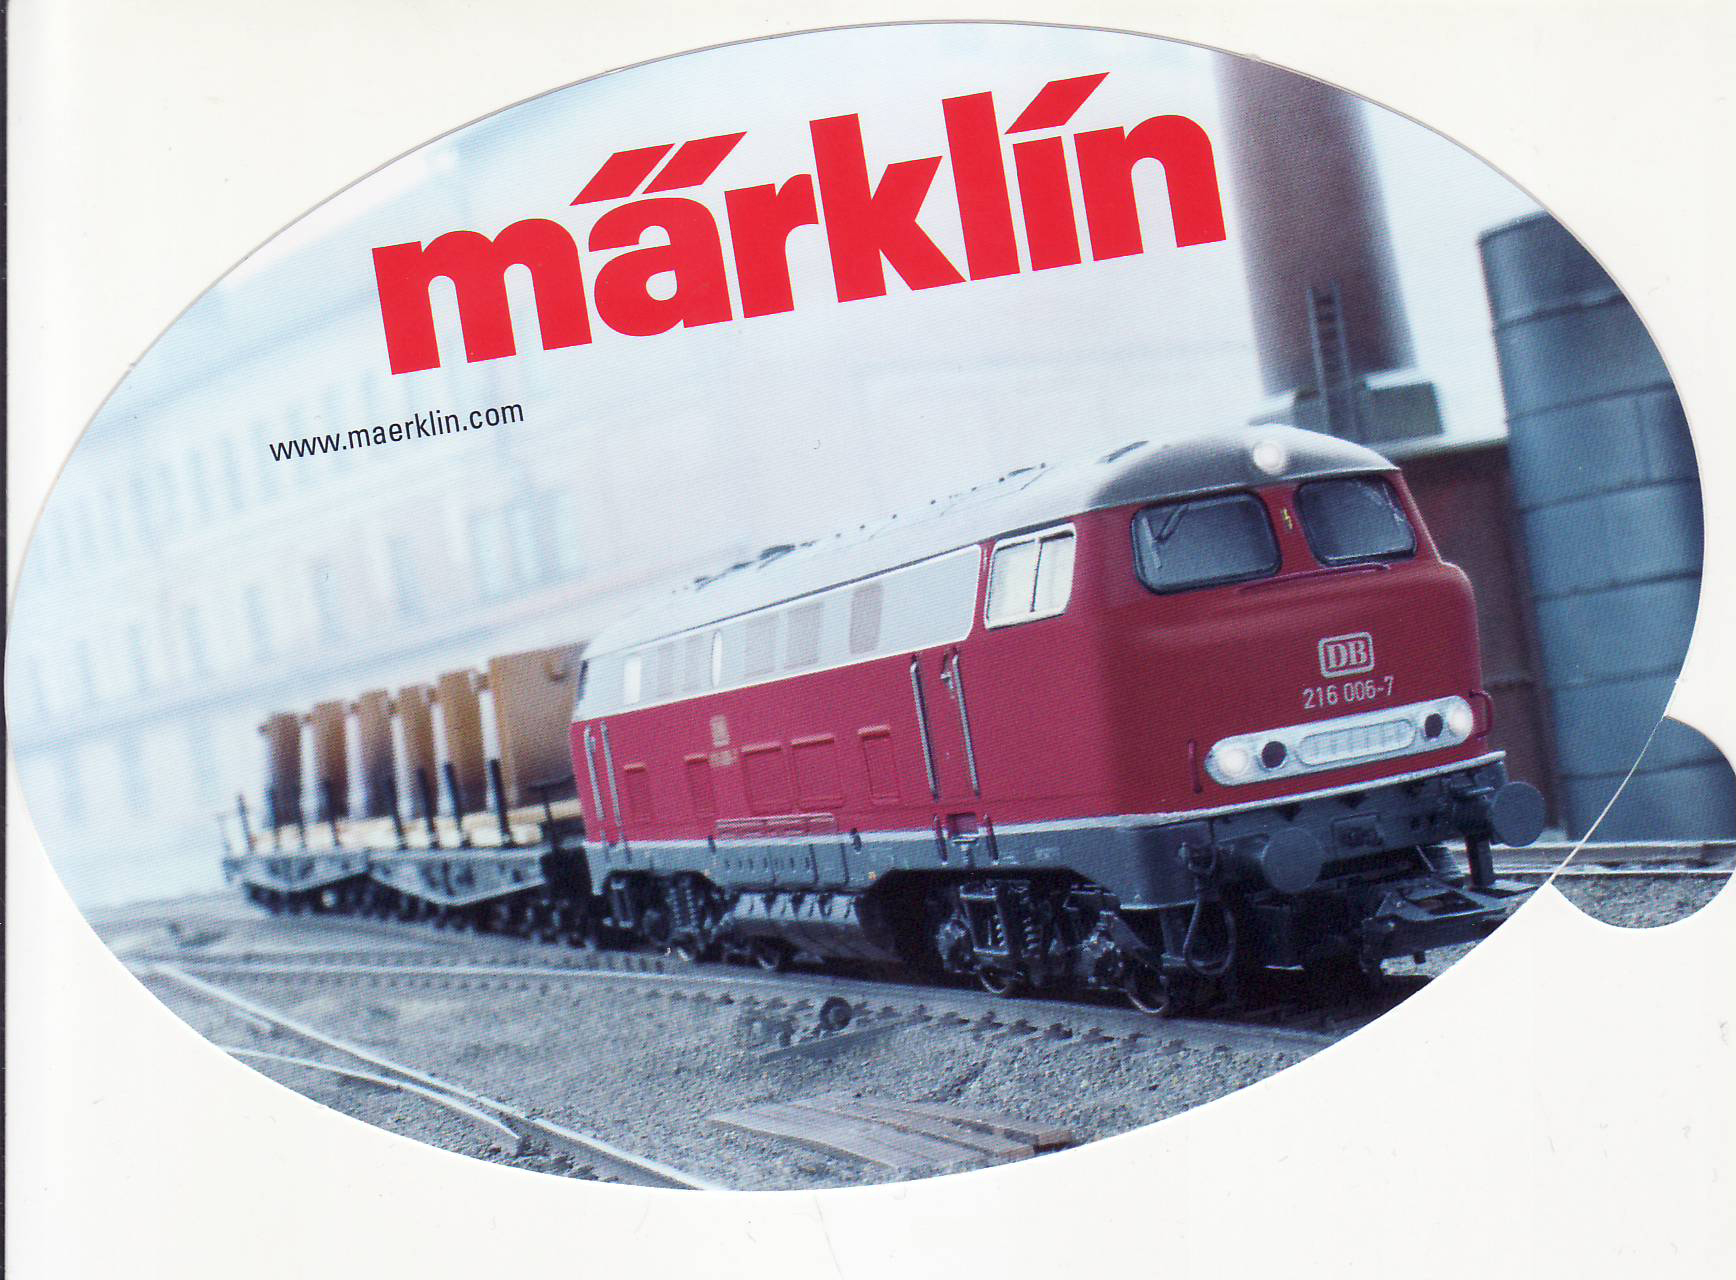 Sticker Marklin - ST032 - Modeltreinshop